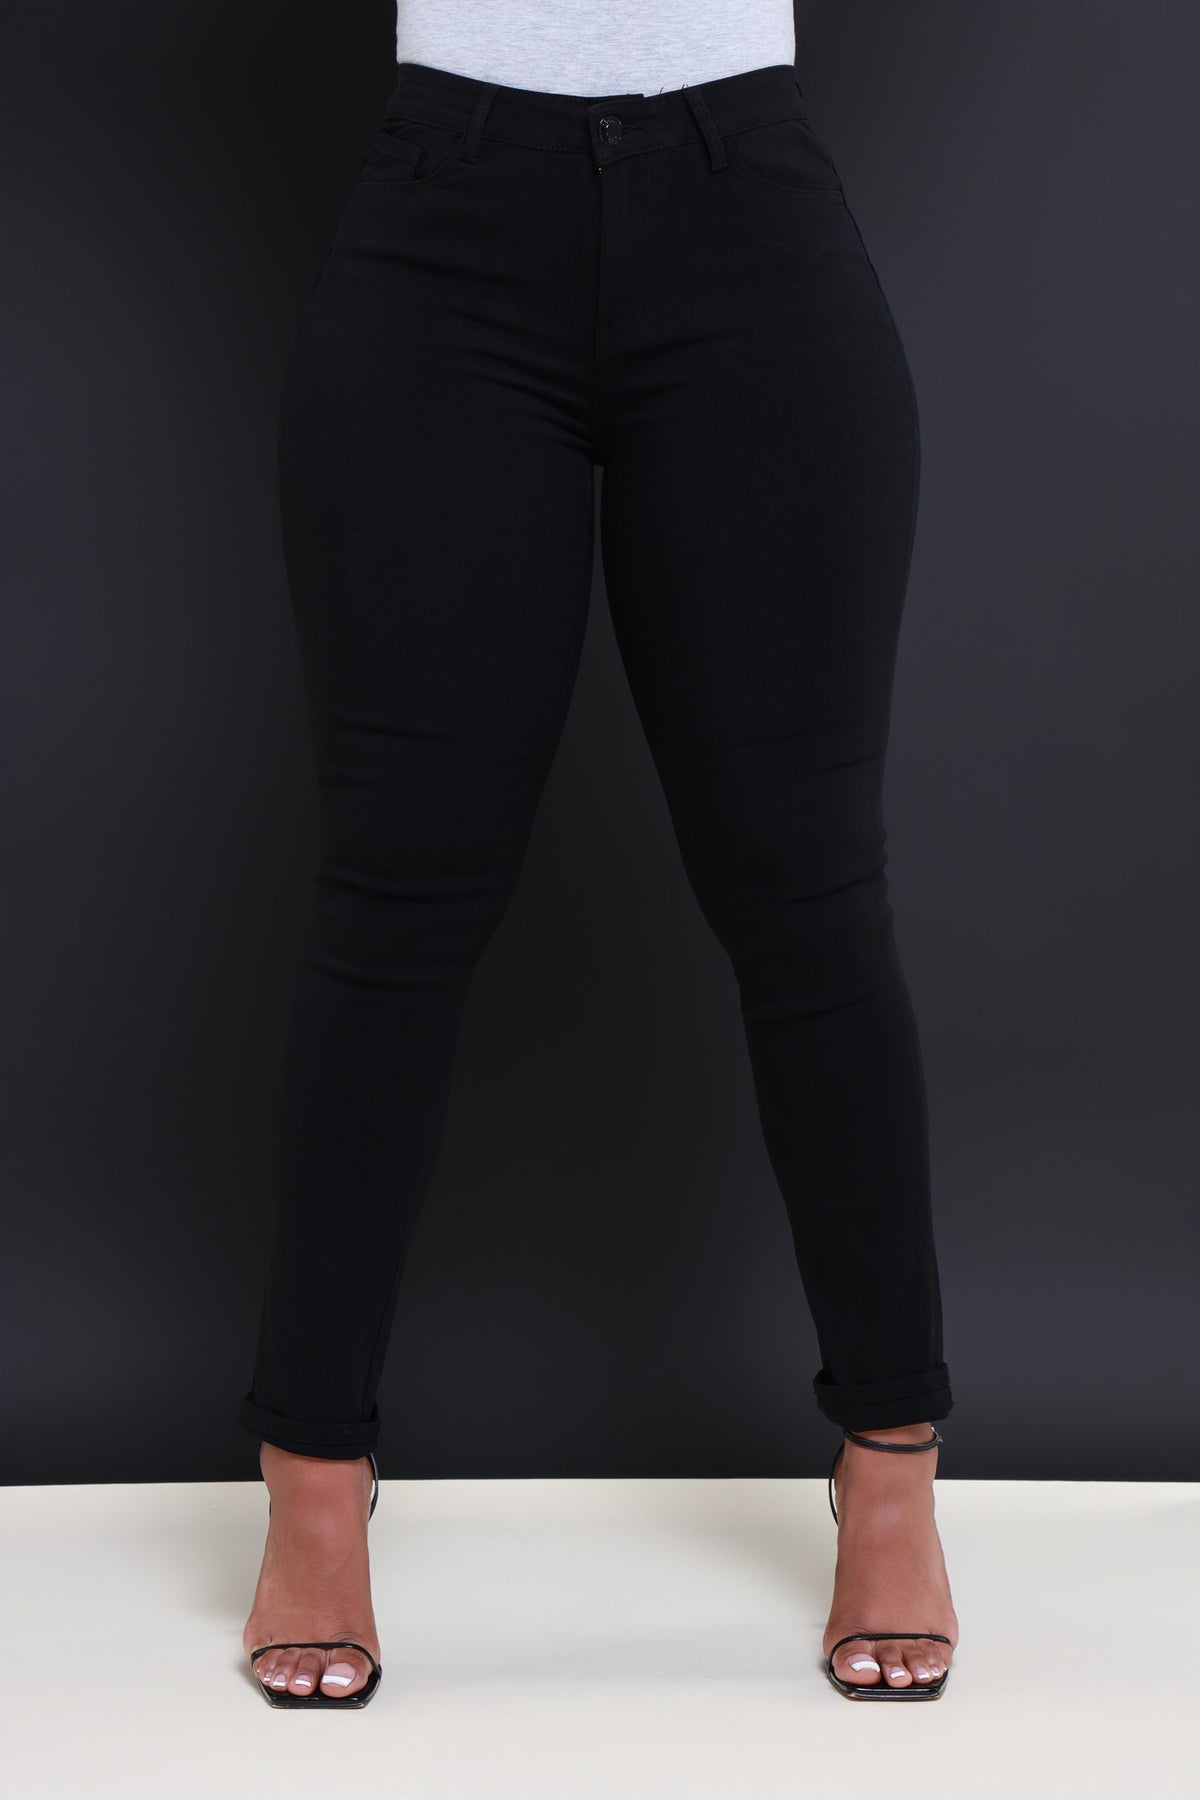 
              Blacklist Butt Lifting Mid Rise Stretchy Jeans - Black - Swank A Posh
            